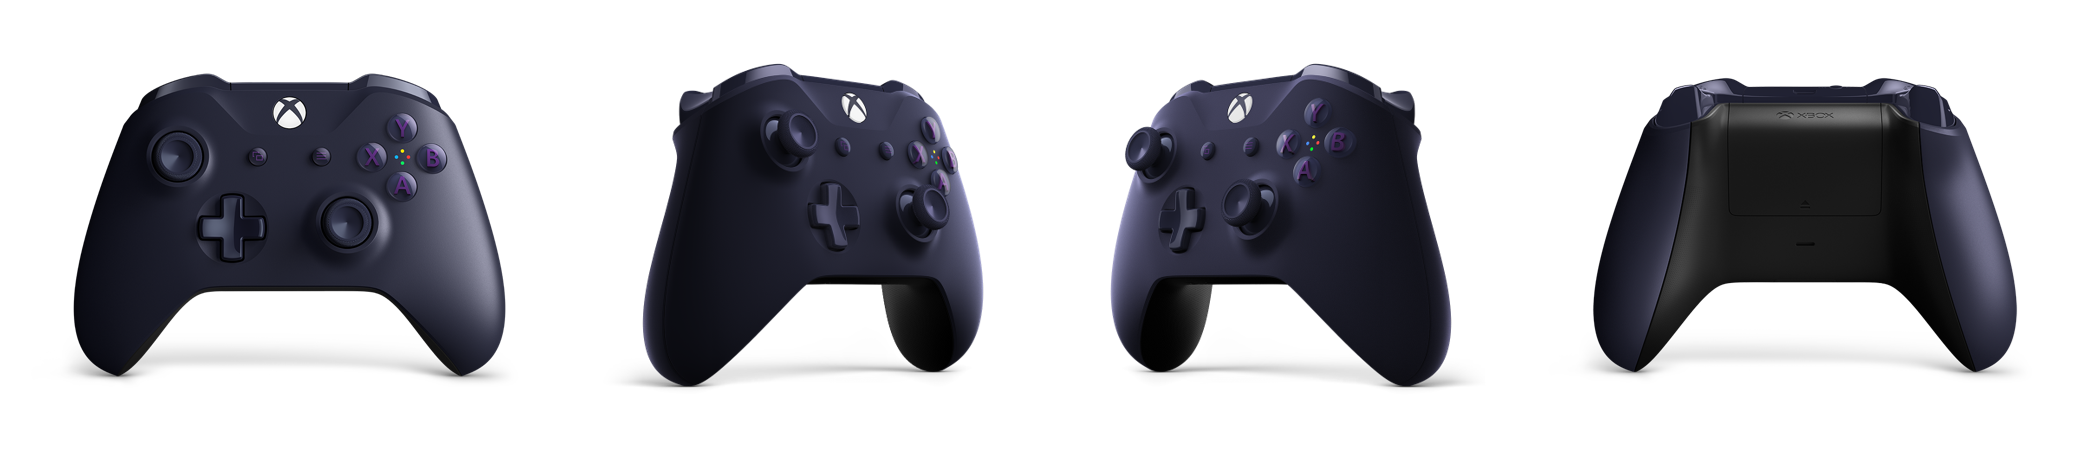 xbox one epic purple controller